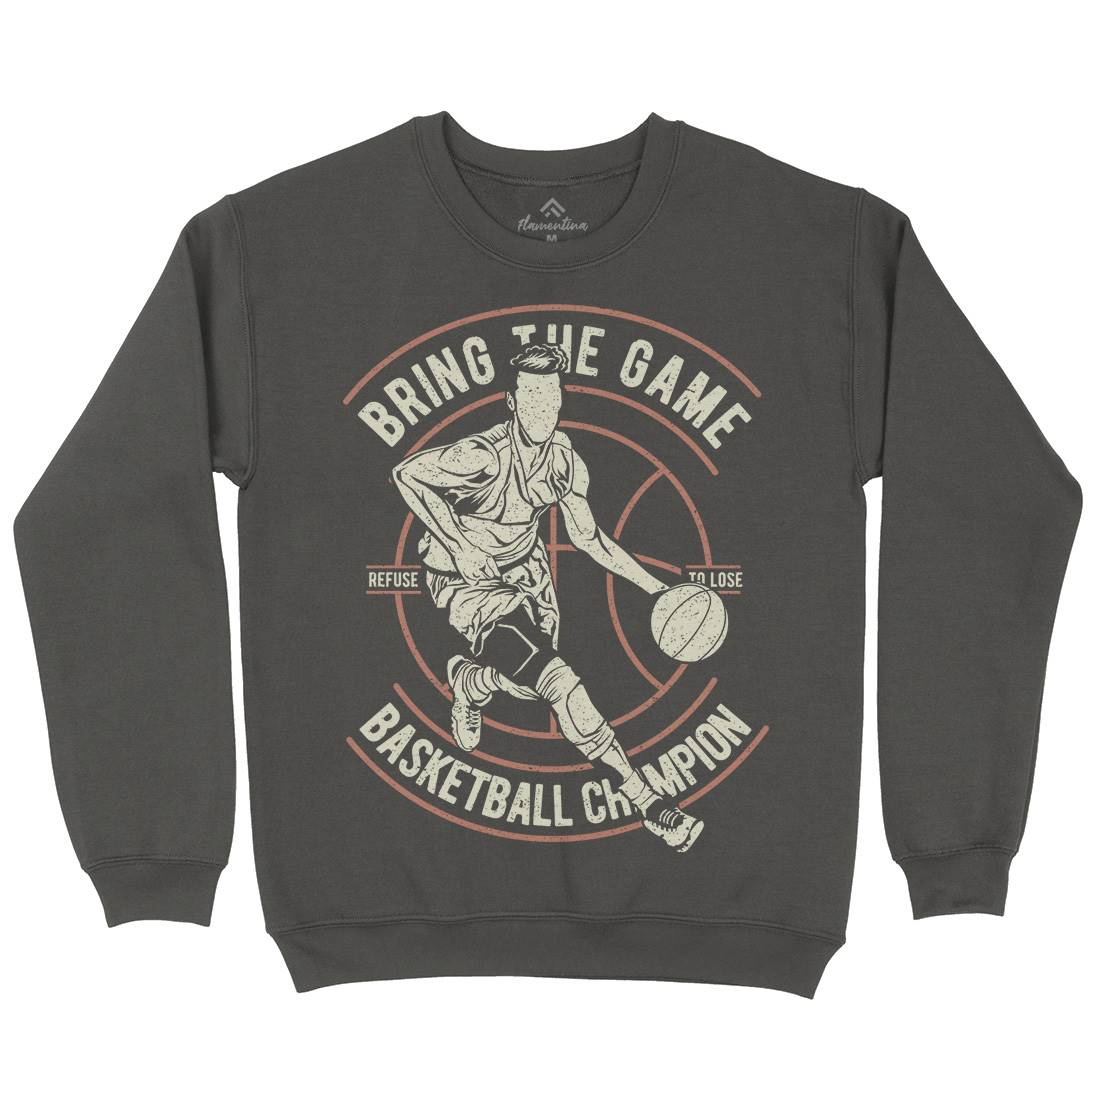 Bring The Game Mens Crew Neck Sweatshirt Sport A627